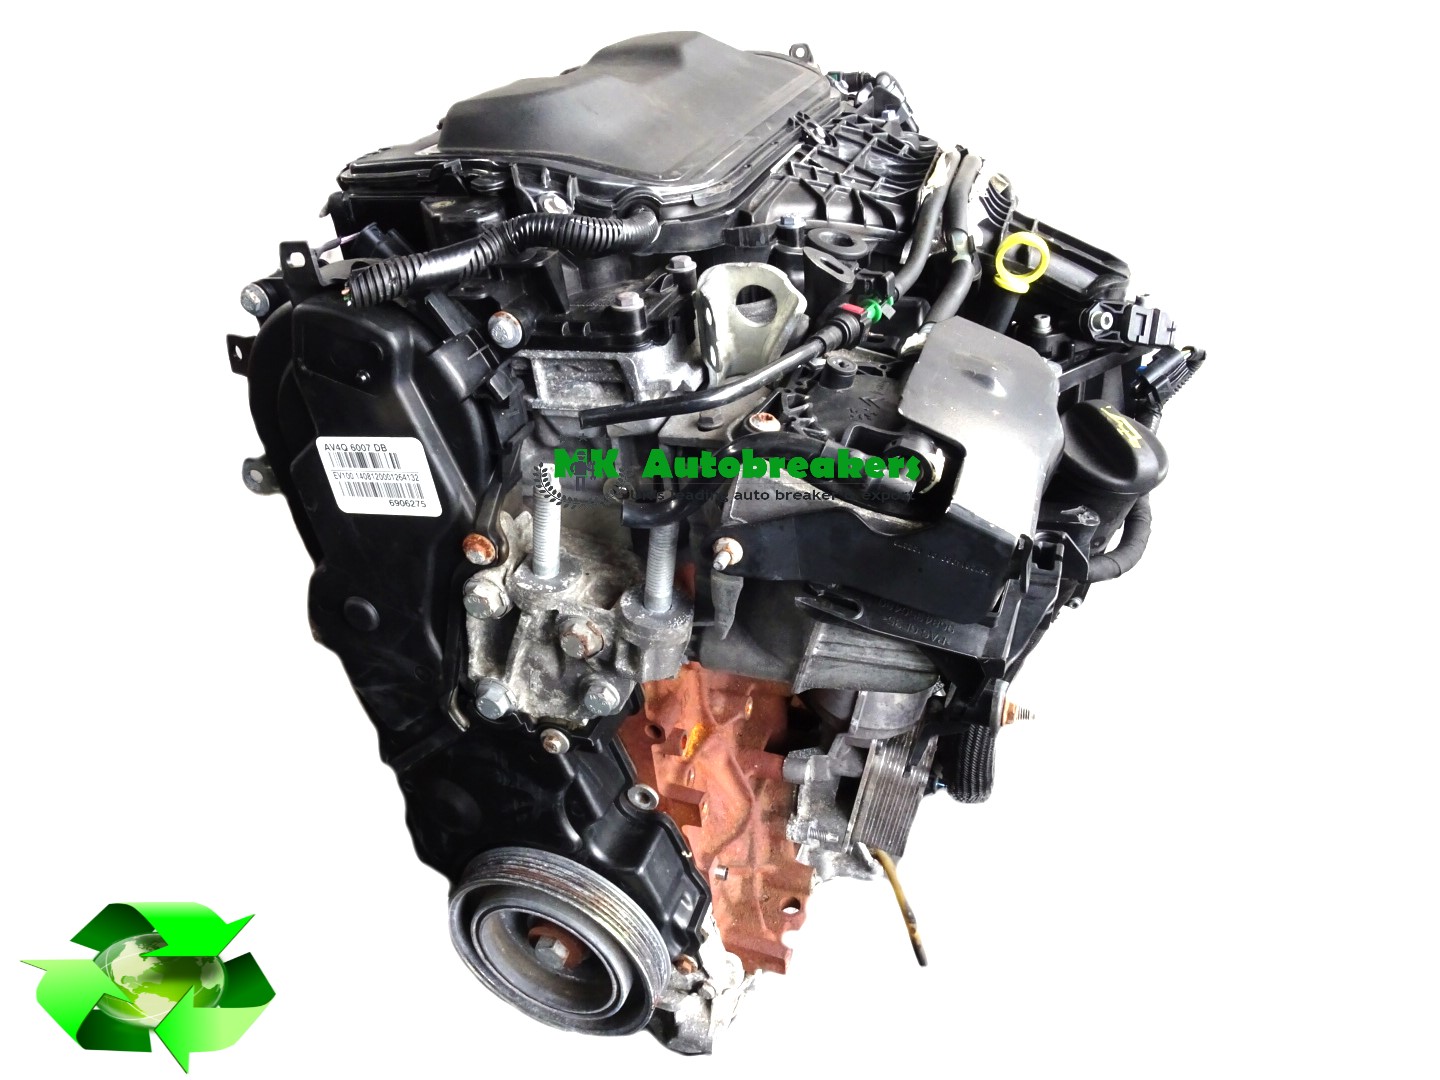 https://mkautobreakers.co.uk/wp-content/uploads/2019/07/Ford-Galaxy-2012-Diesel-Engine1.jpg